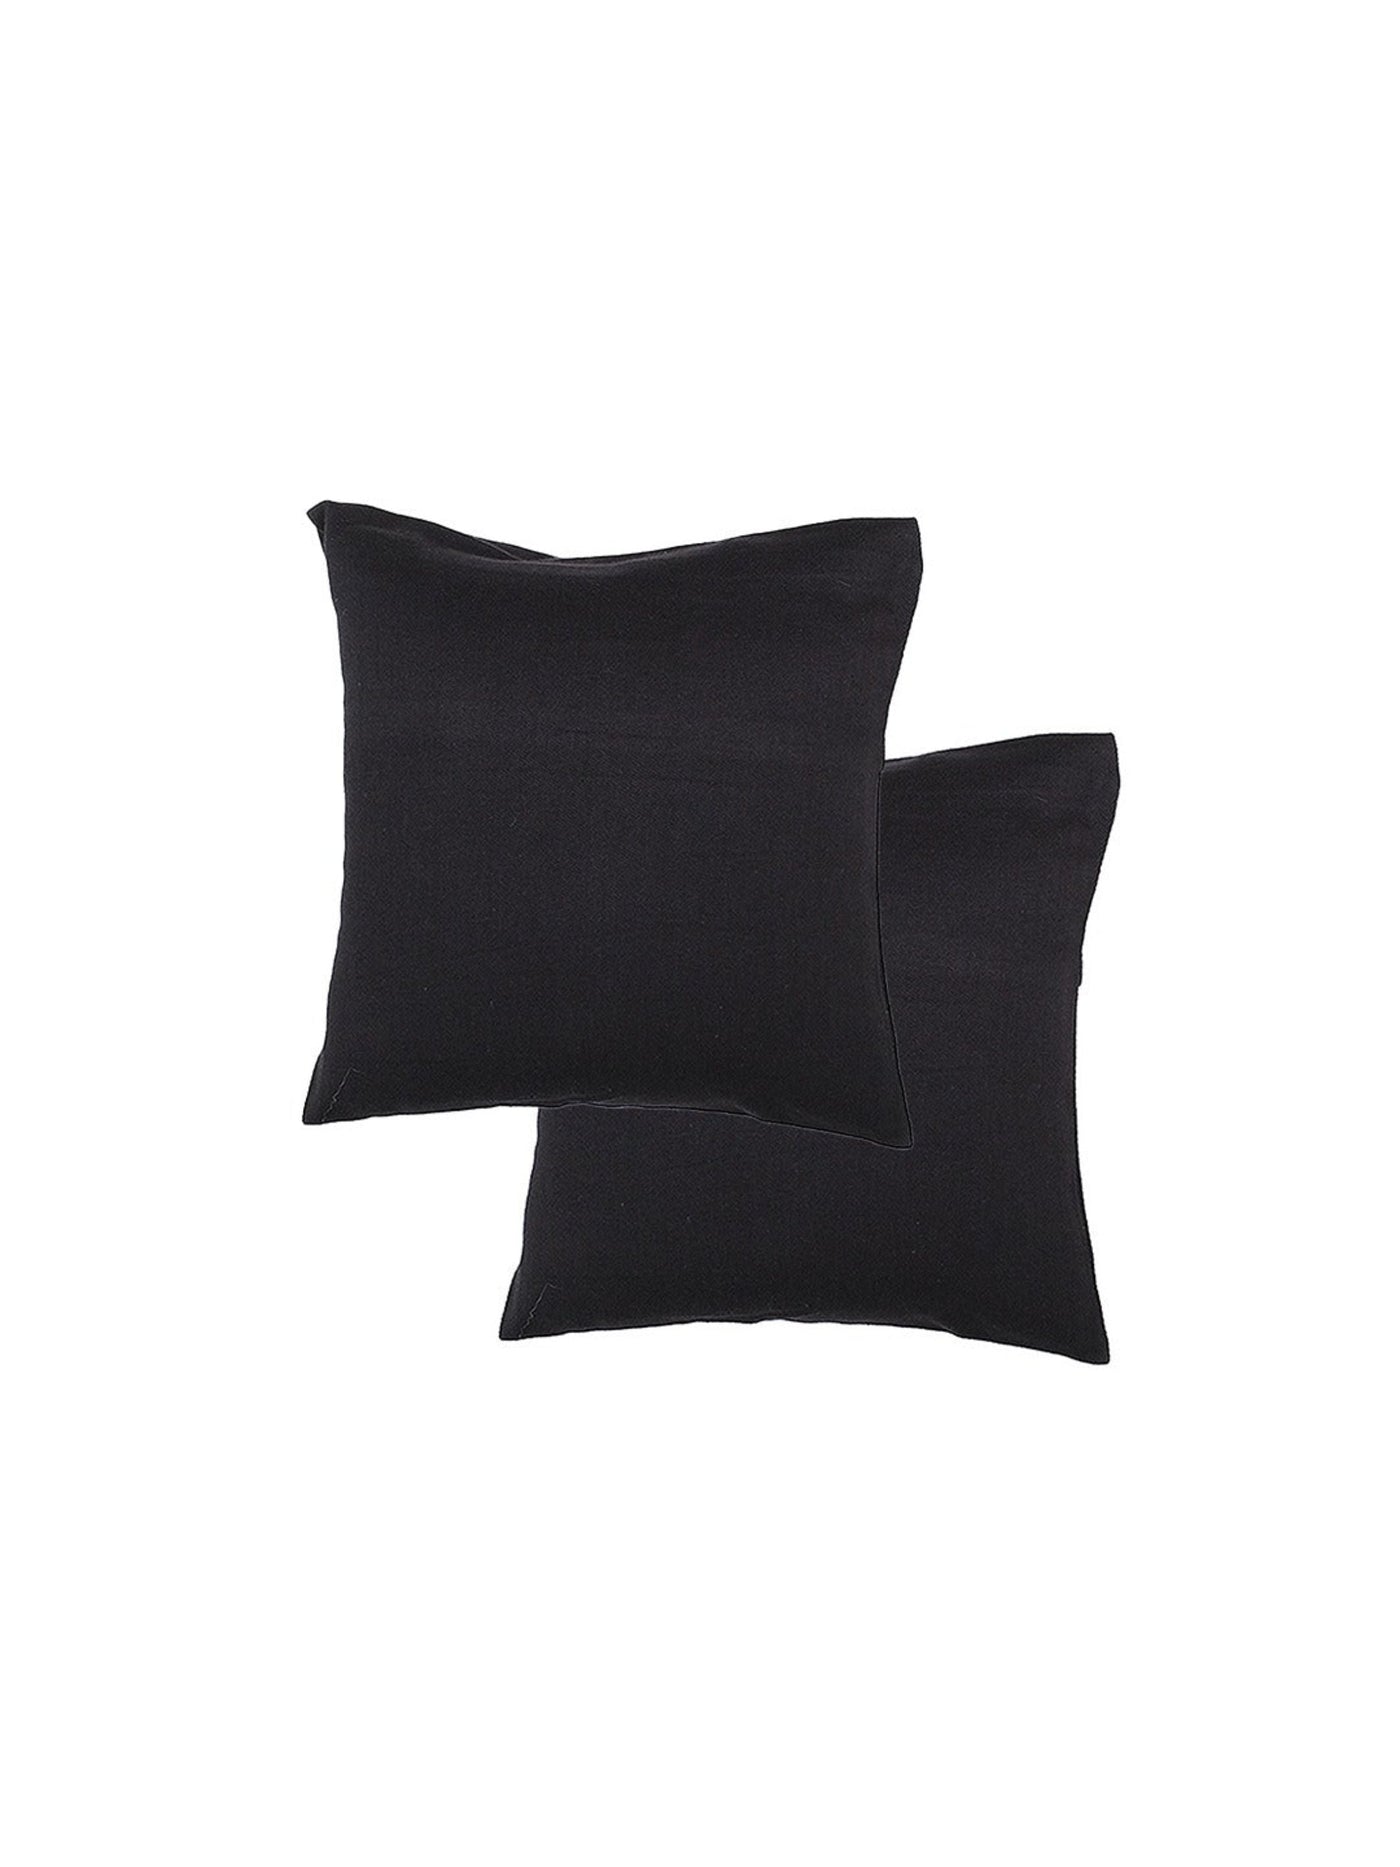 Cushion Cover - The 70S Chevron Cotton 2 - Black-8903773000975